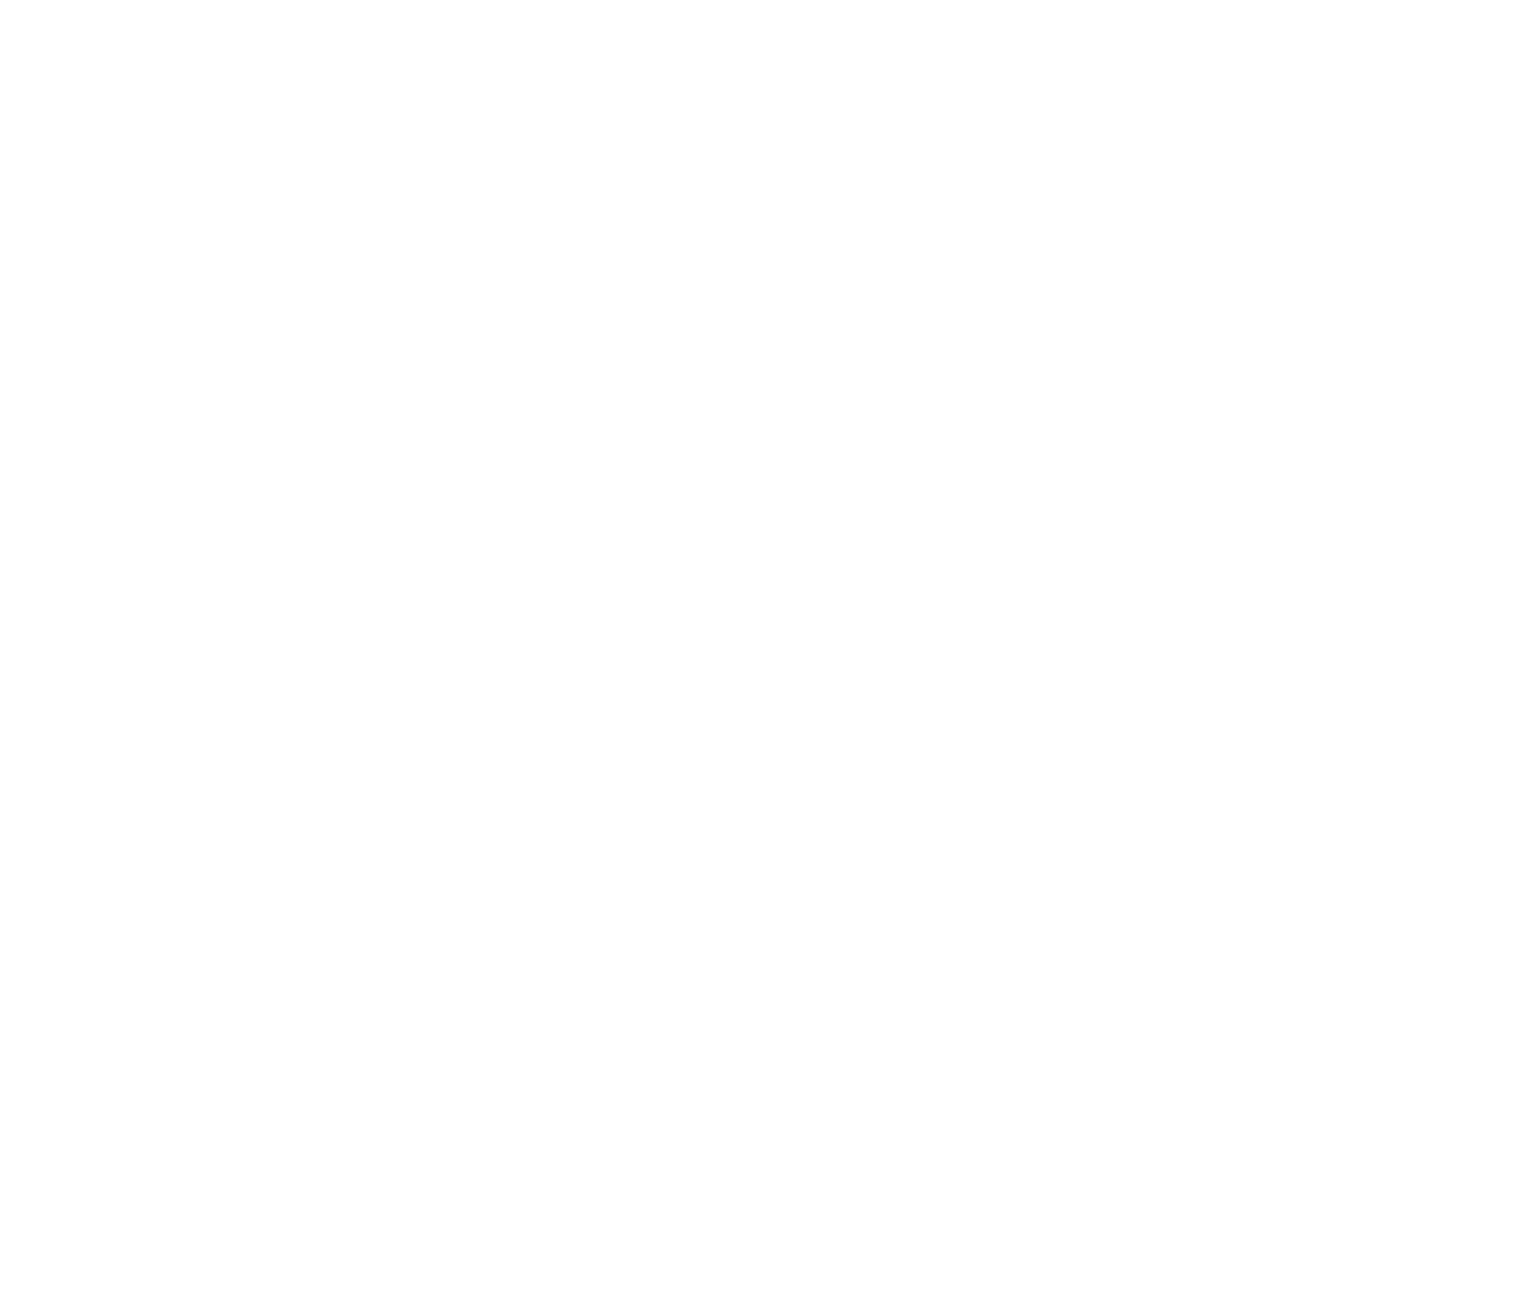 Vancouver closets ltd.